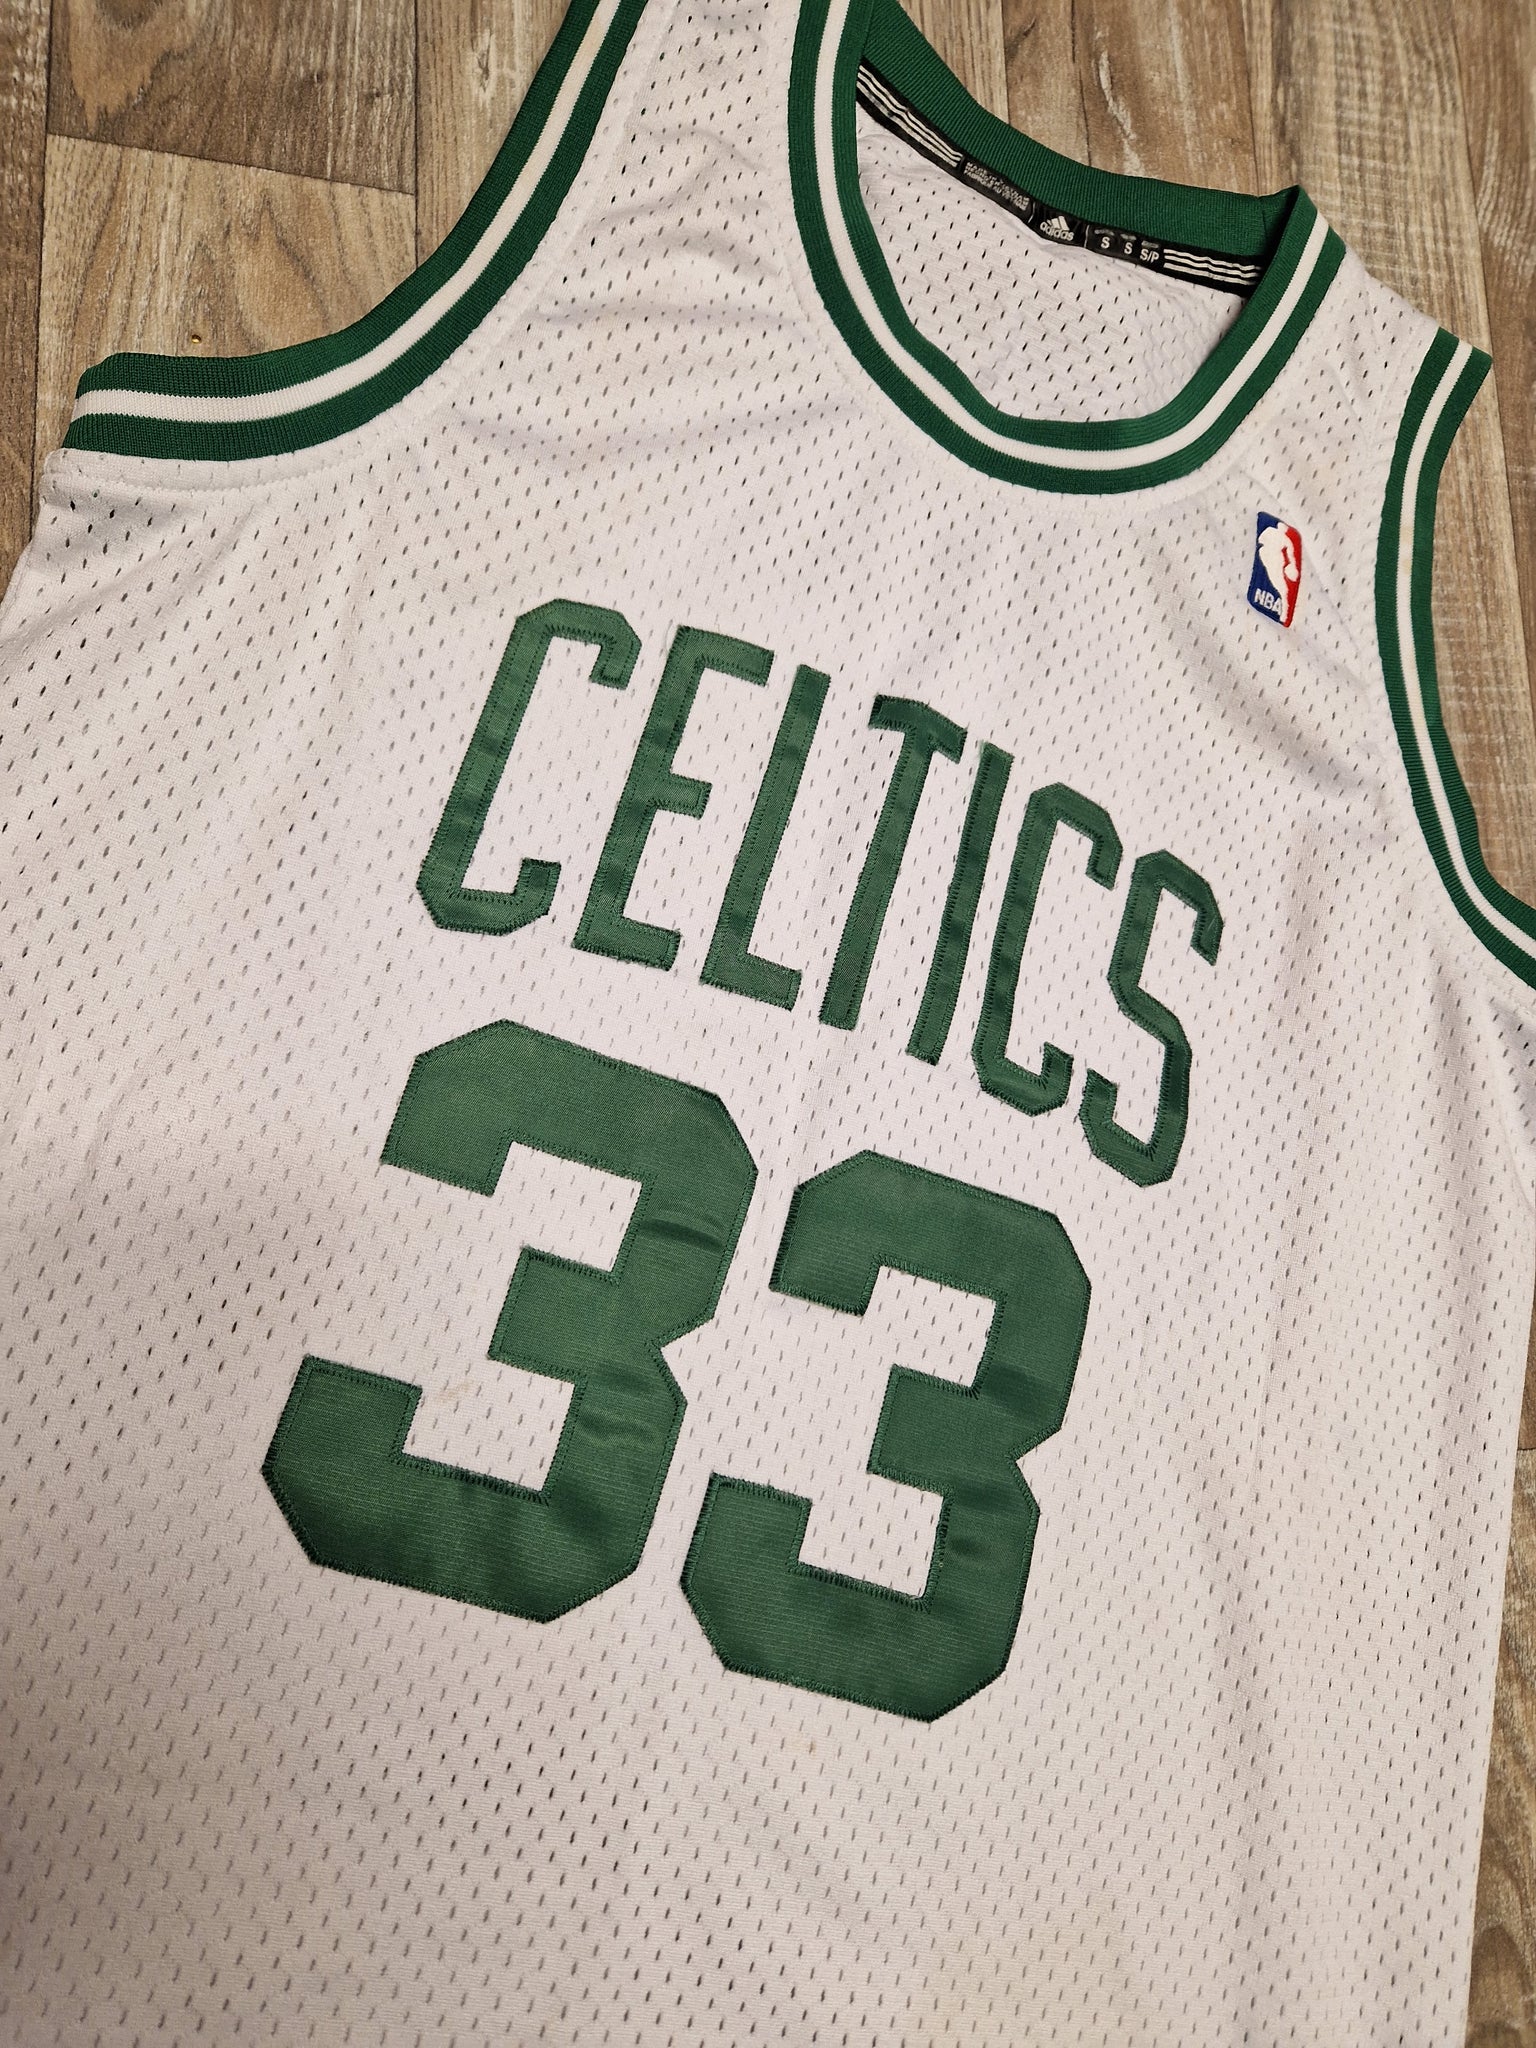 🏀 Larry Bird Boston Celtics Jersey Size Small – The Throwback